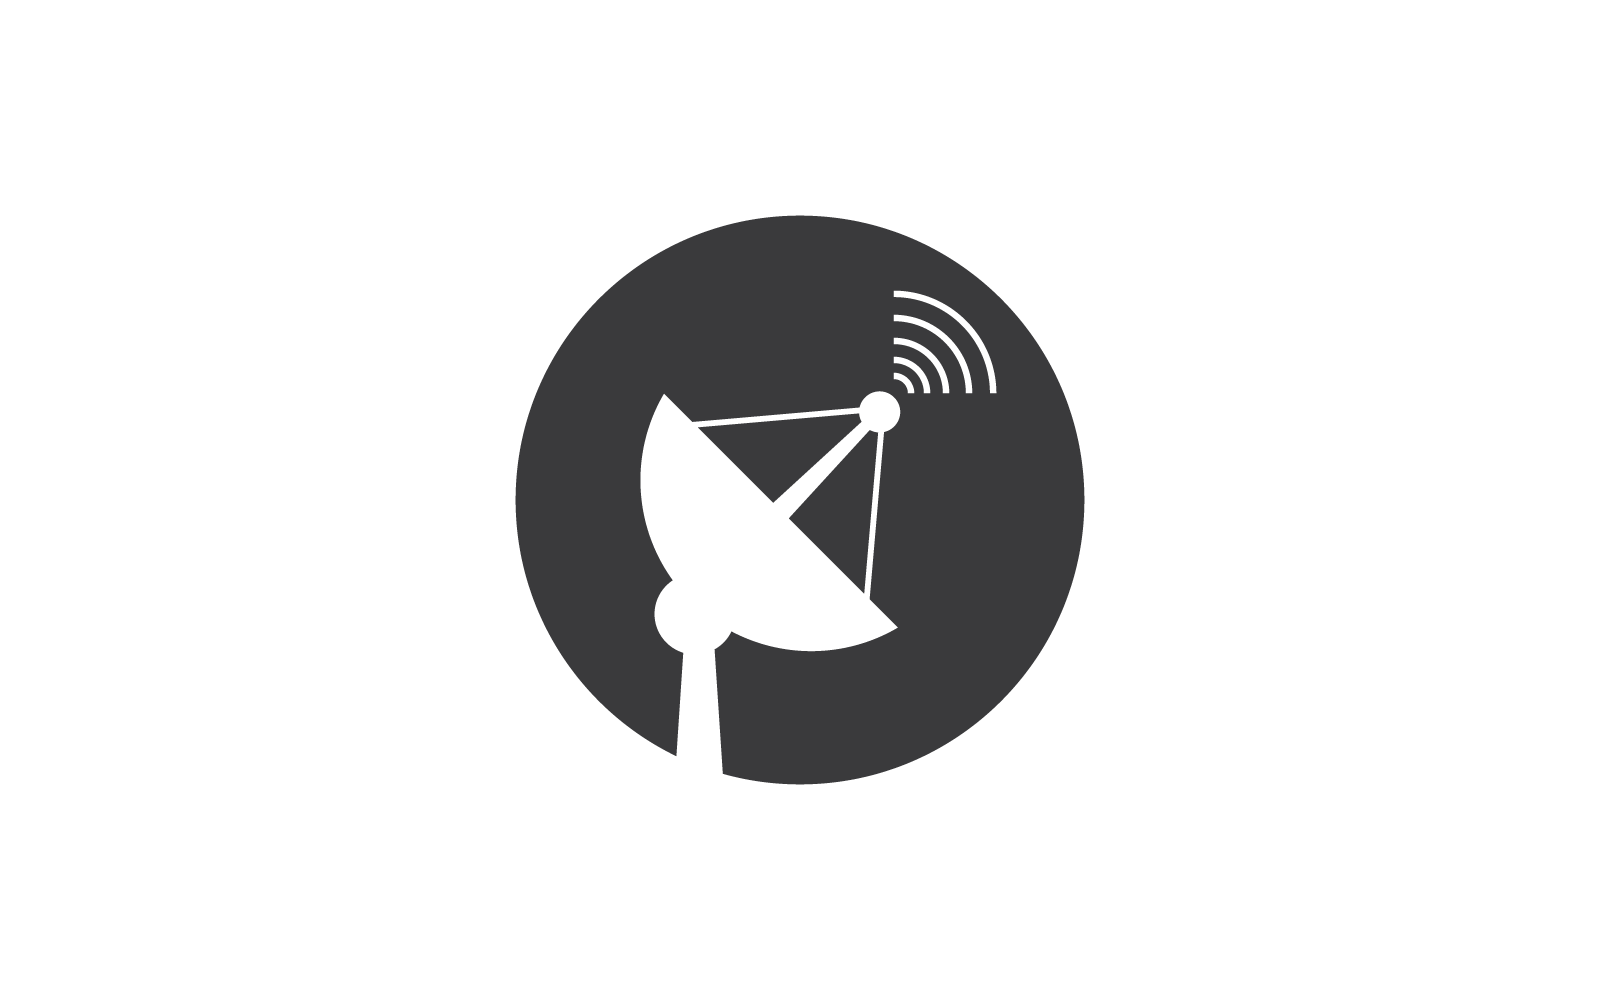 Satellite design illustration icon template